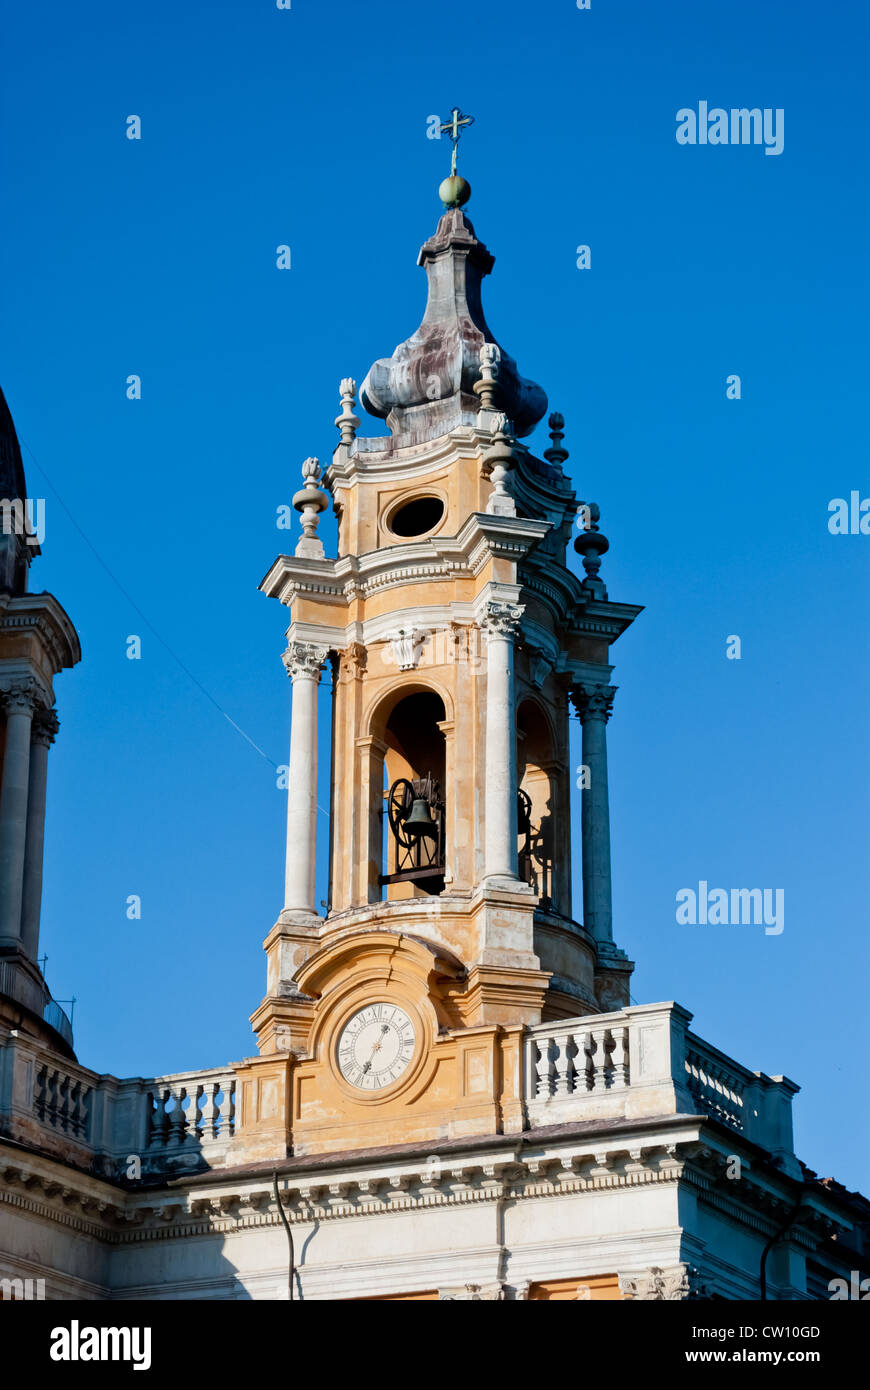 Basilica di Superga bell tower detail, Turin, Italy Stock Photo